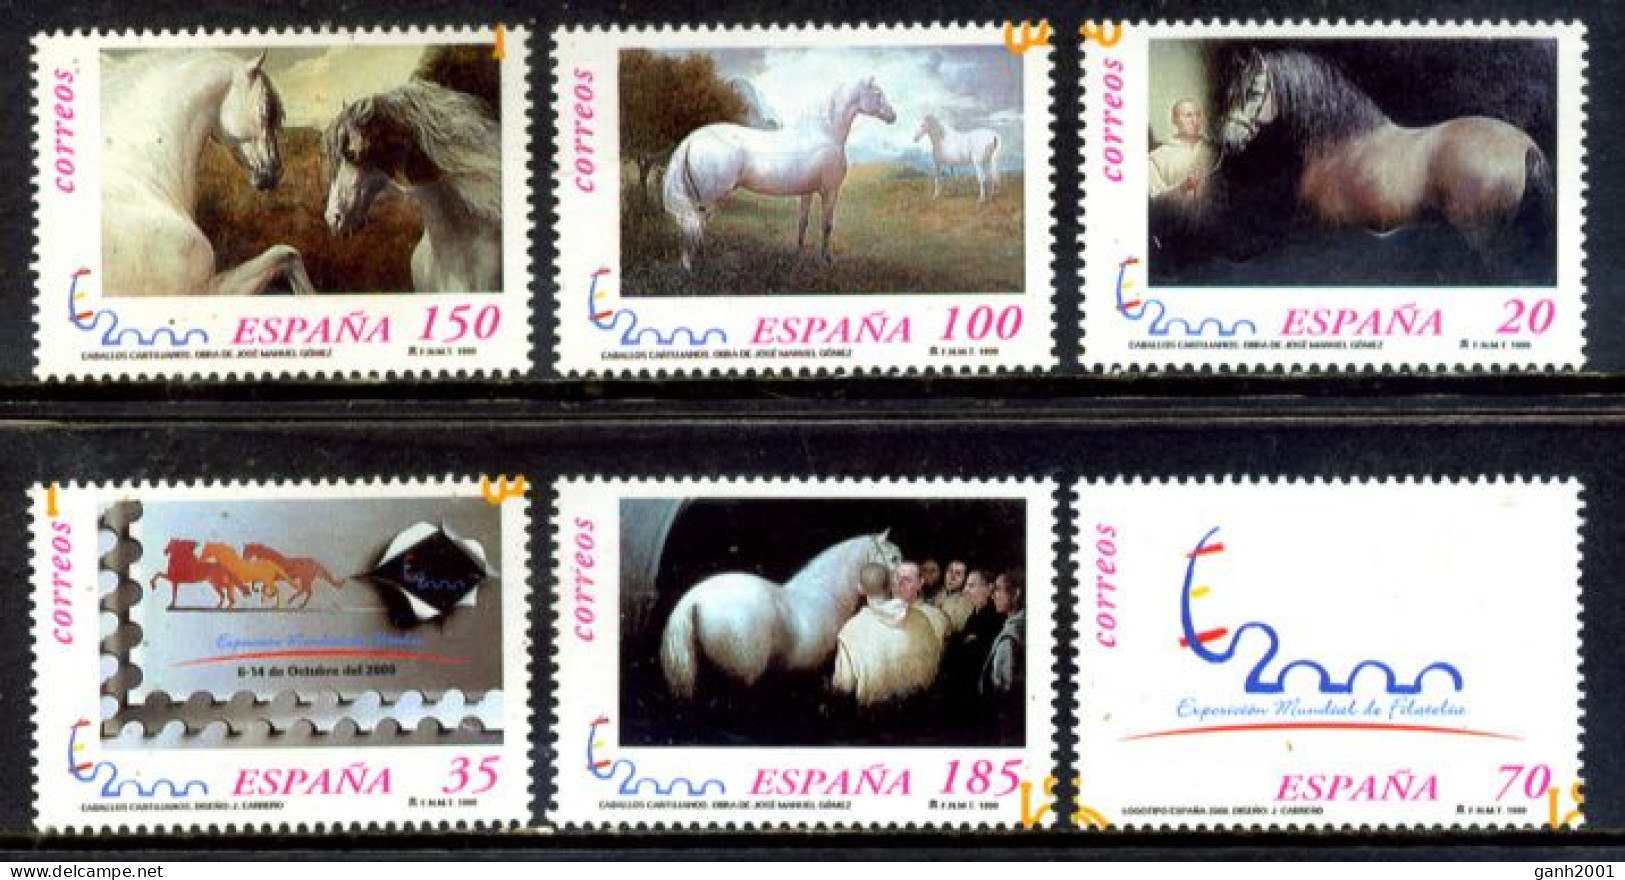 Spain 1999 España / Mammals Horses MNH Caballos Säugetiere Chevaux / Hb19  34-6 - Pferde